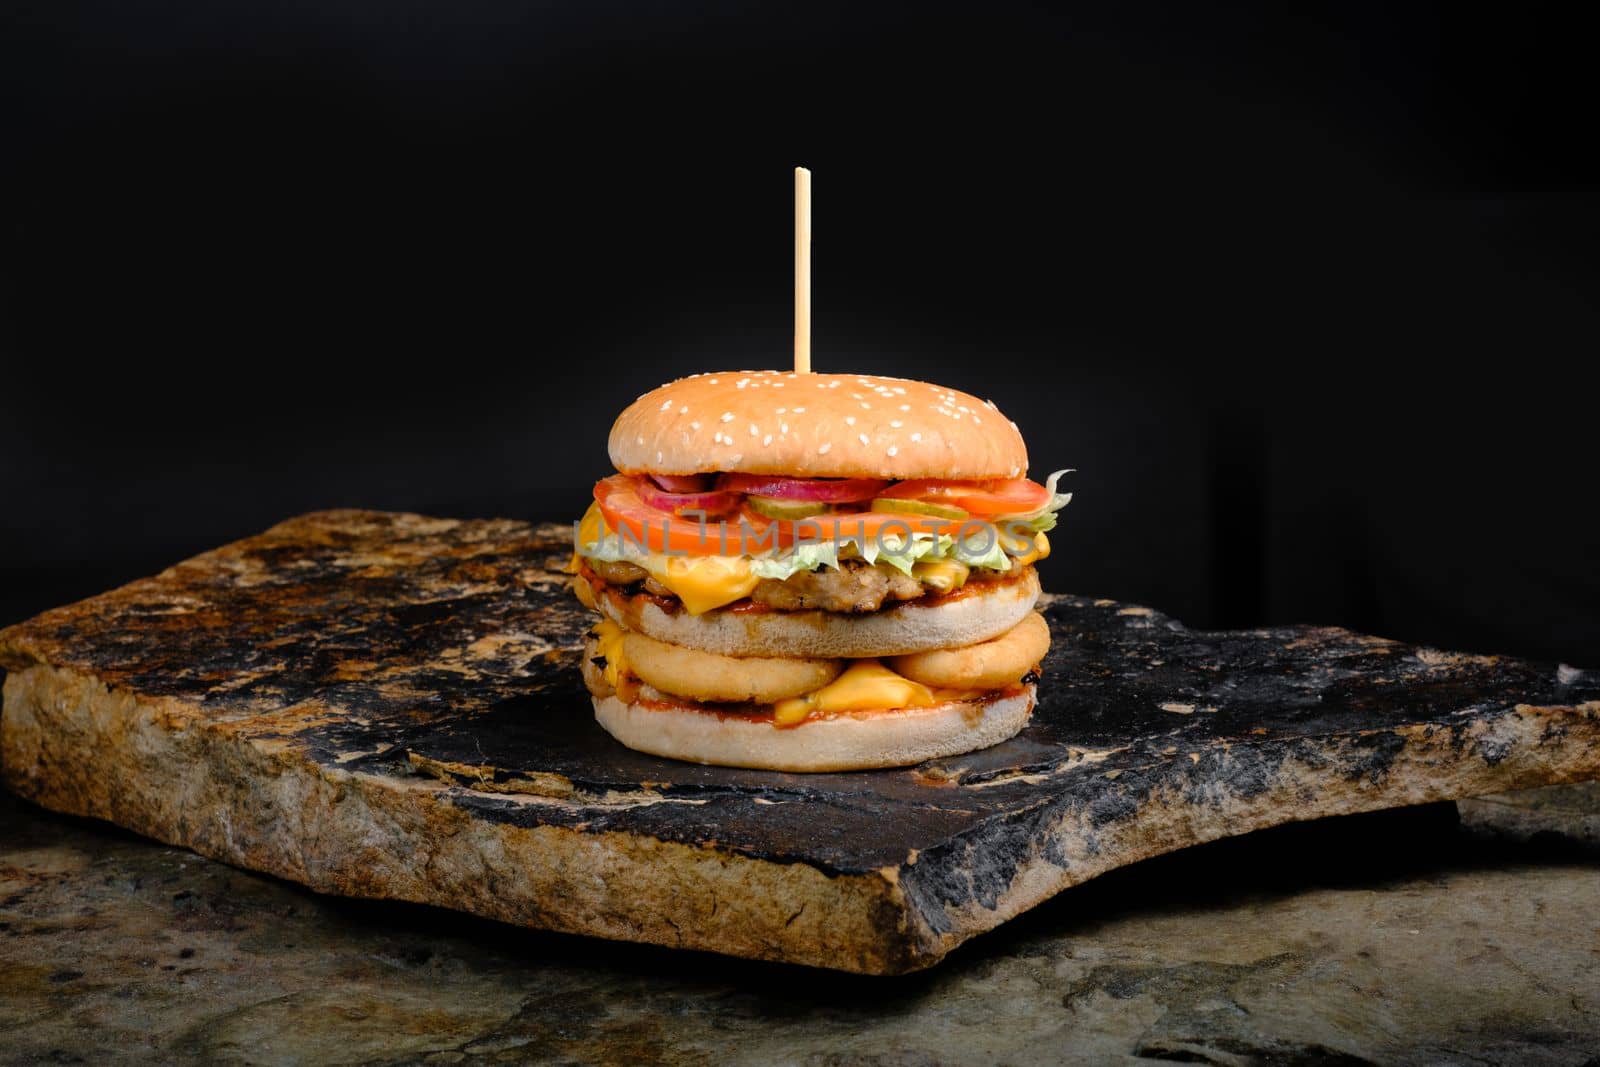 Rustic tasty Burger on Stone Background by Symonenko